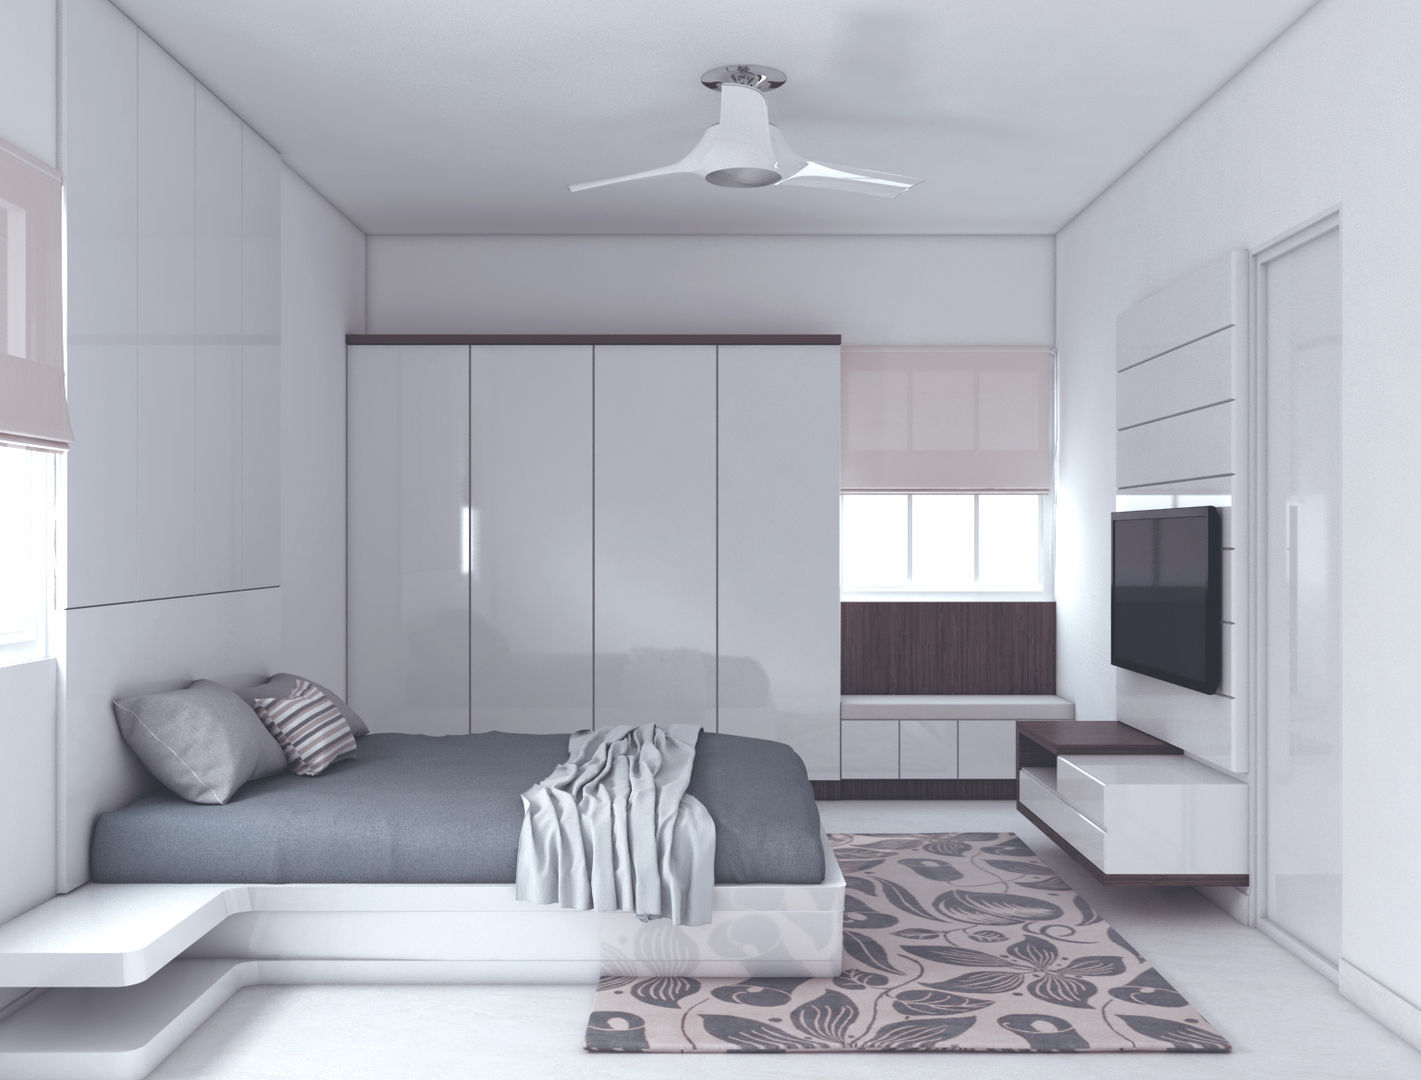 Minimalistic interiors for residence, Rhythm And Emphasis Design Studio Rhythm And Emphasis Design Studio Quartos modernos